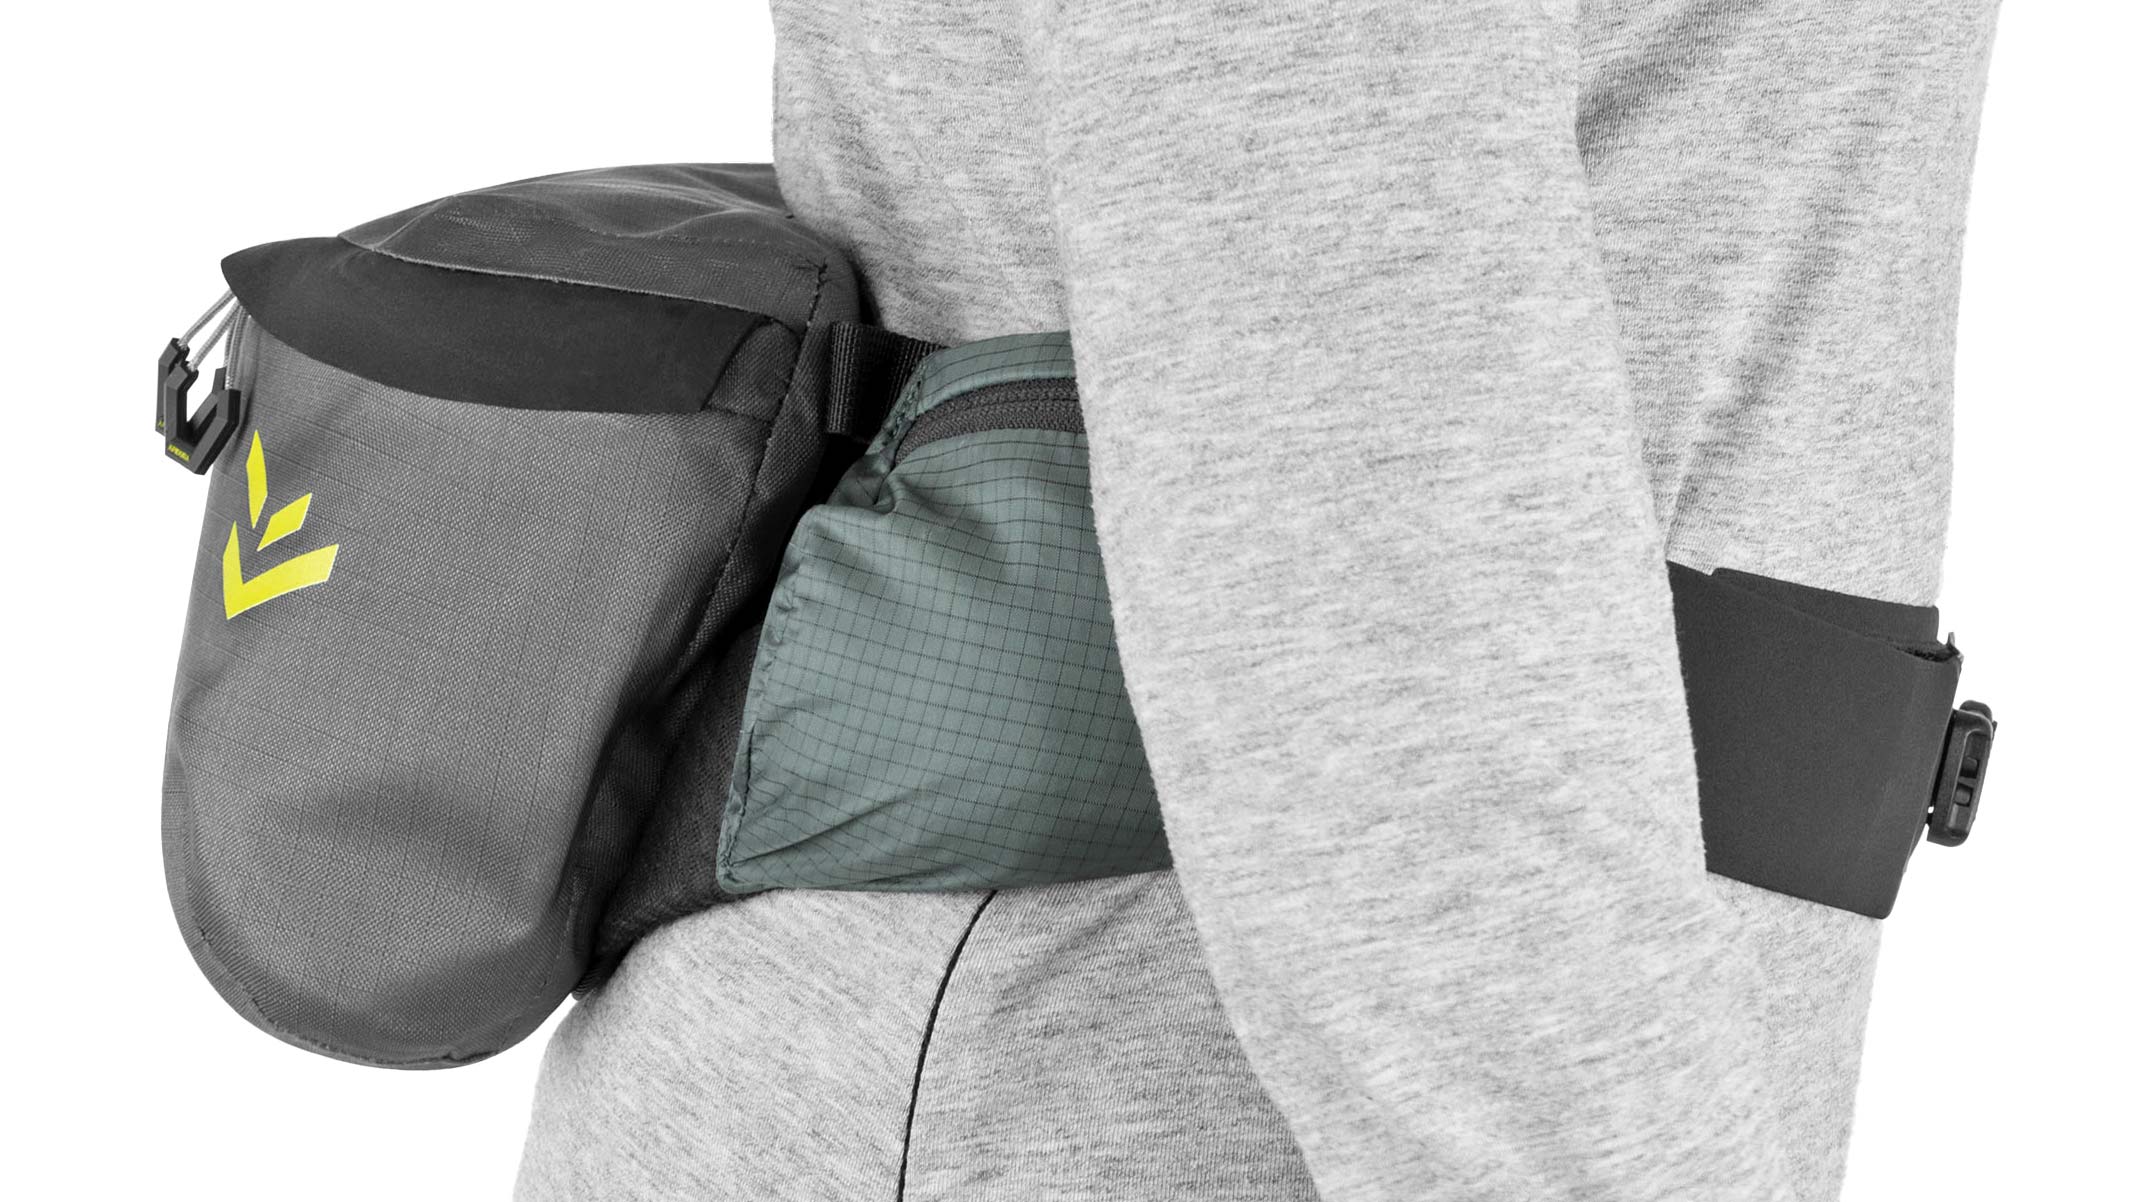 Apidura Backcountry Hip Pack bikepacking-style waist bag, side